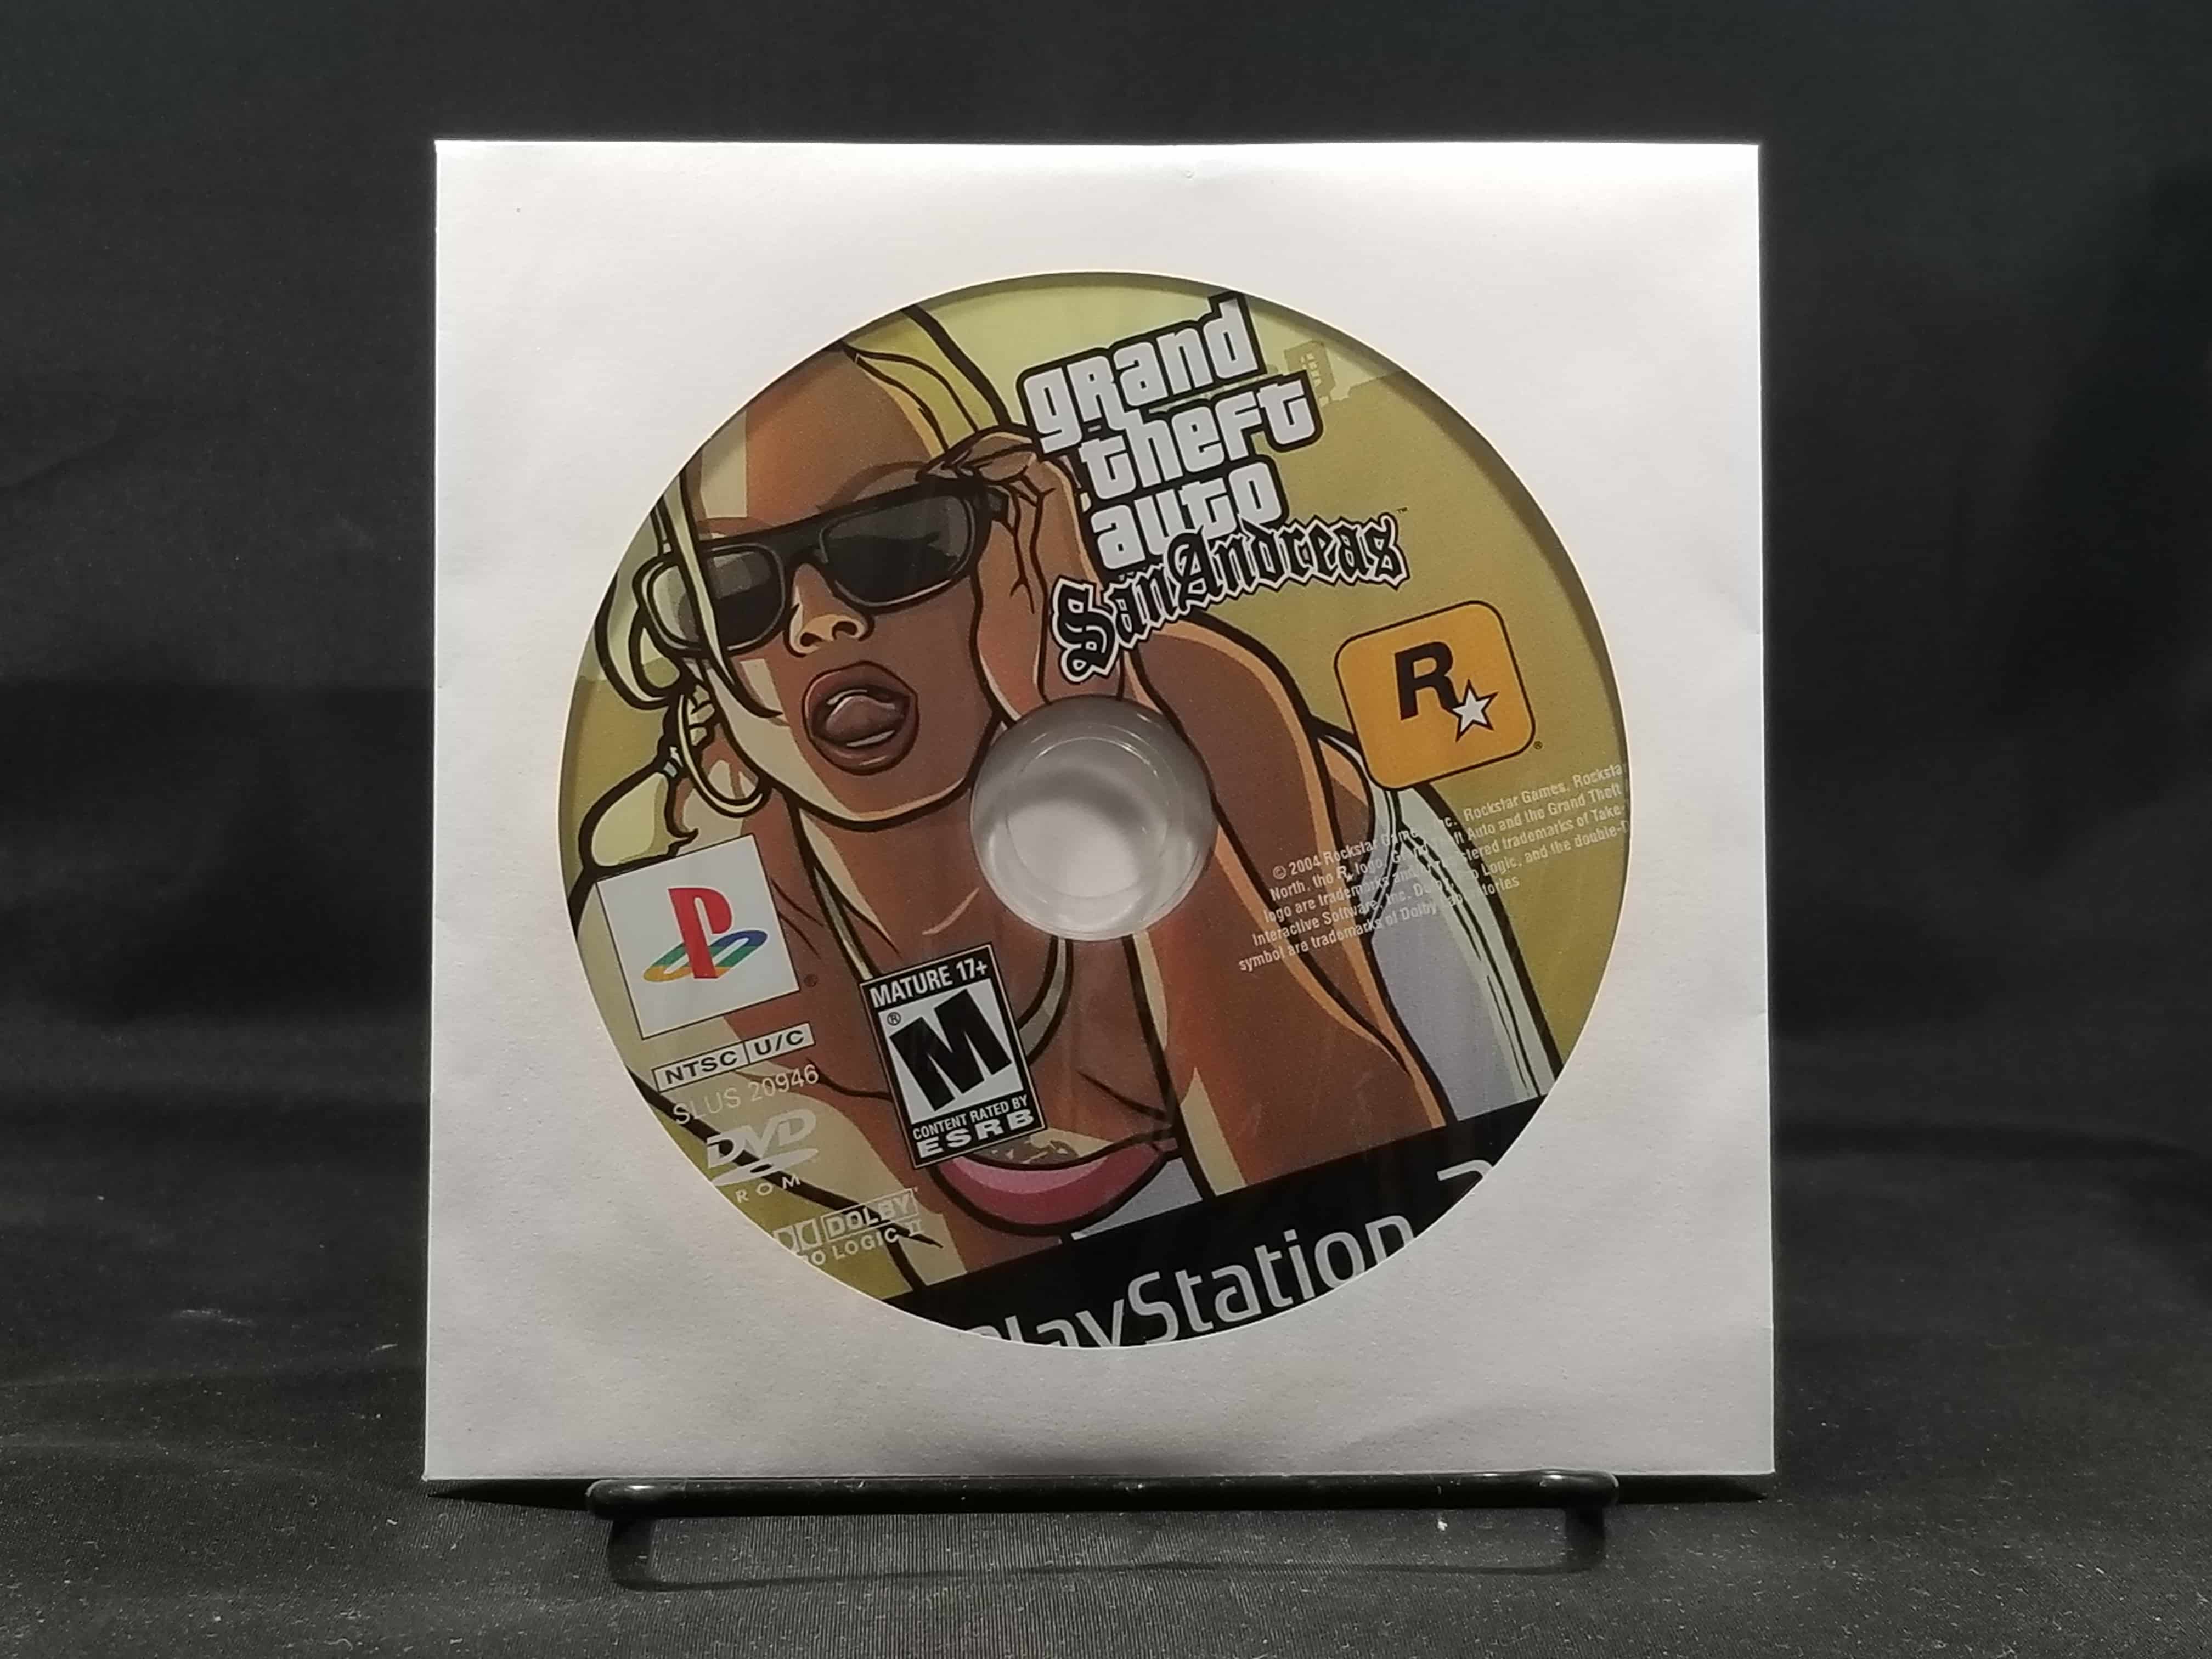 Grand Theft Auto: San Andreas (PS2)